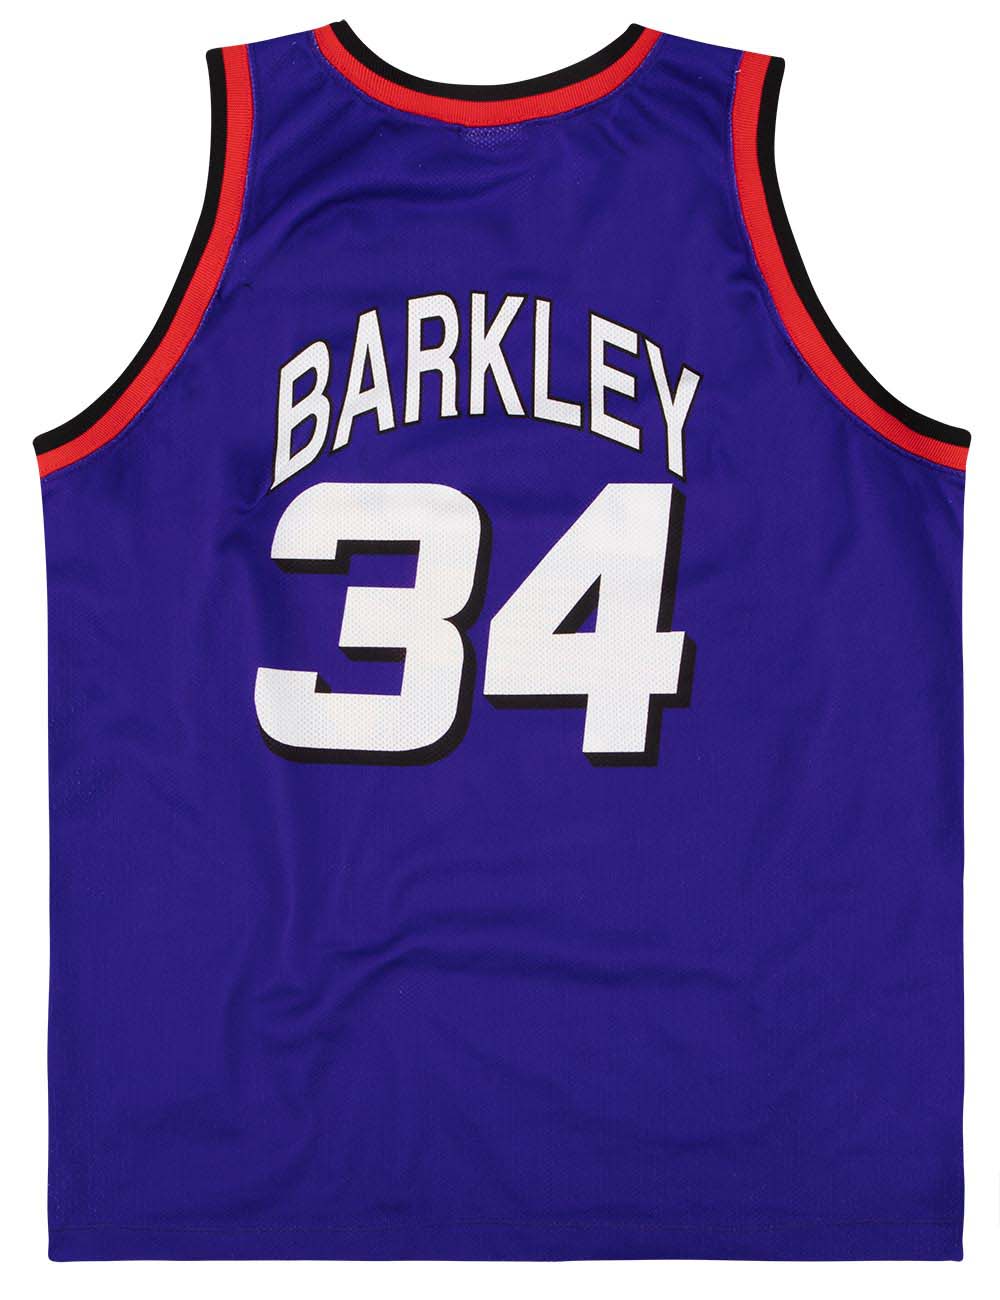 Mediador Cumplir Determinar con precisión Charles Barkley Throwback Jerseys | Vintage NBA Gear | Game7 - Classic  American Sports